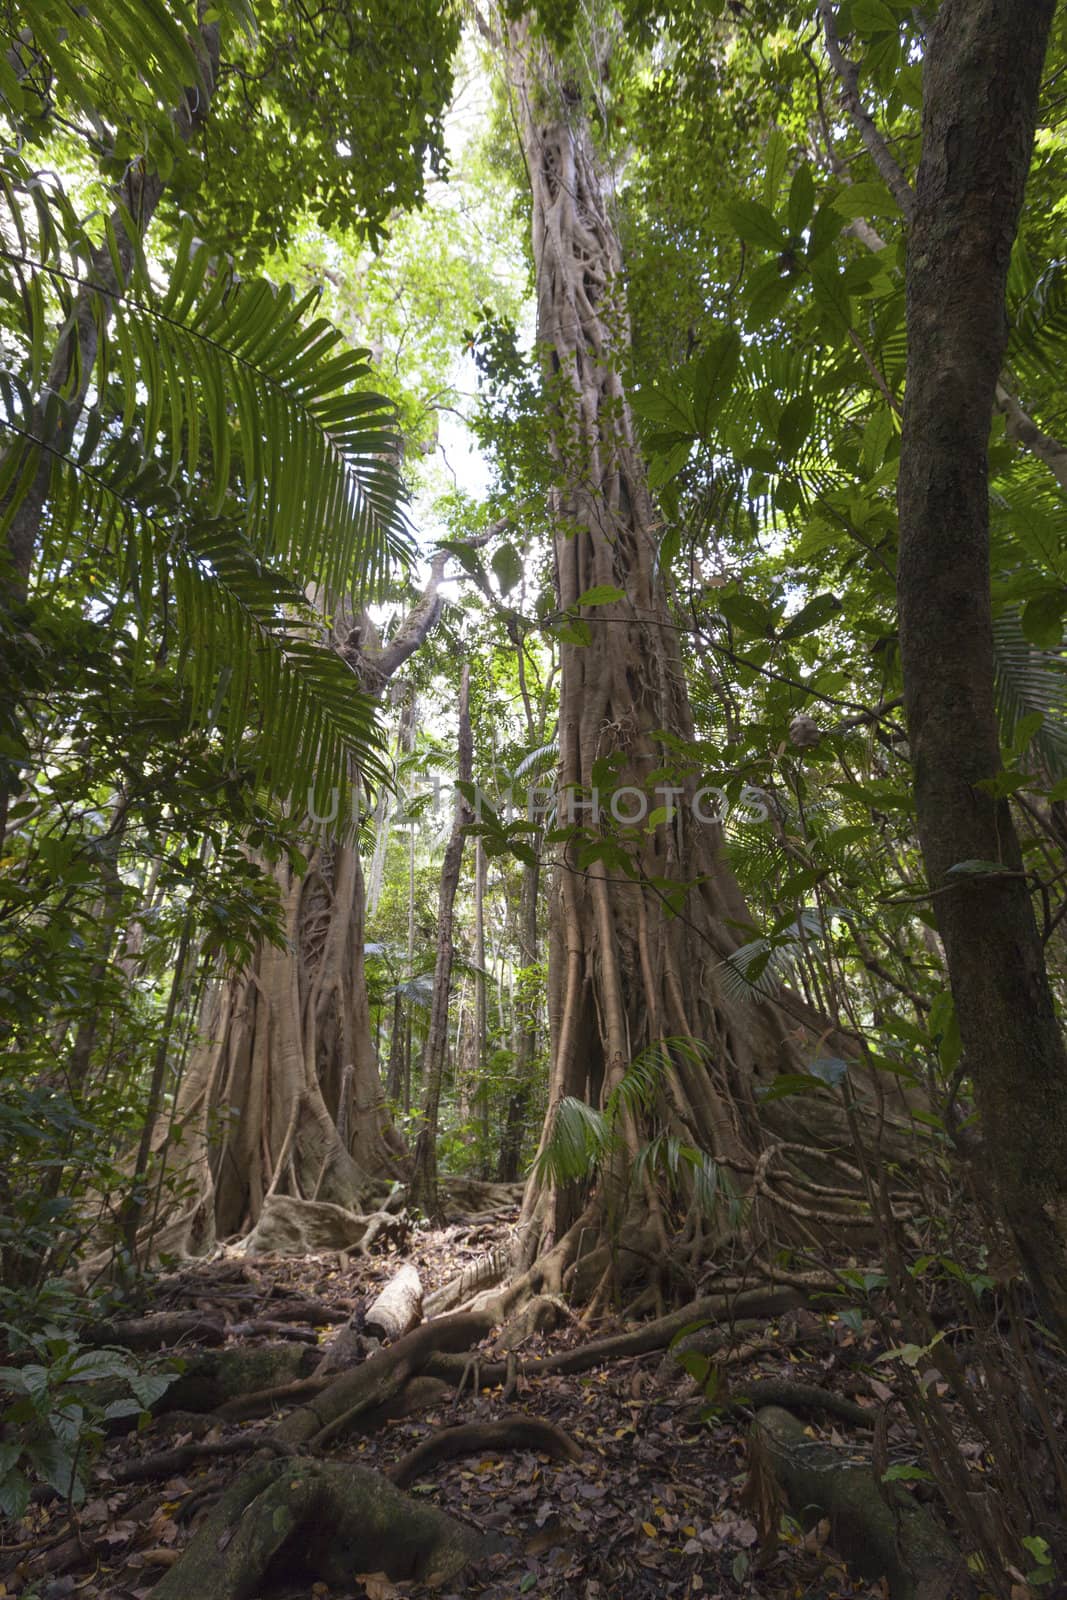 Walking through the dense rainforest